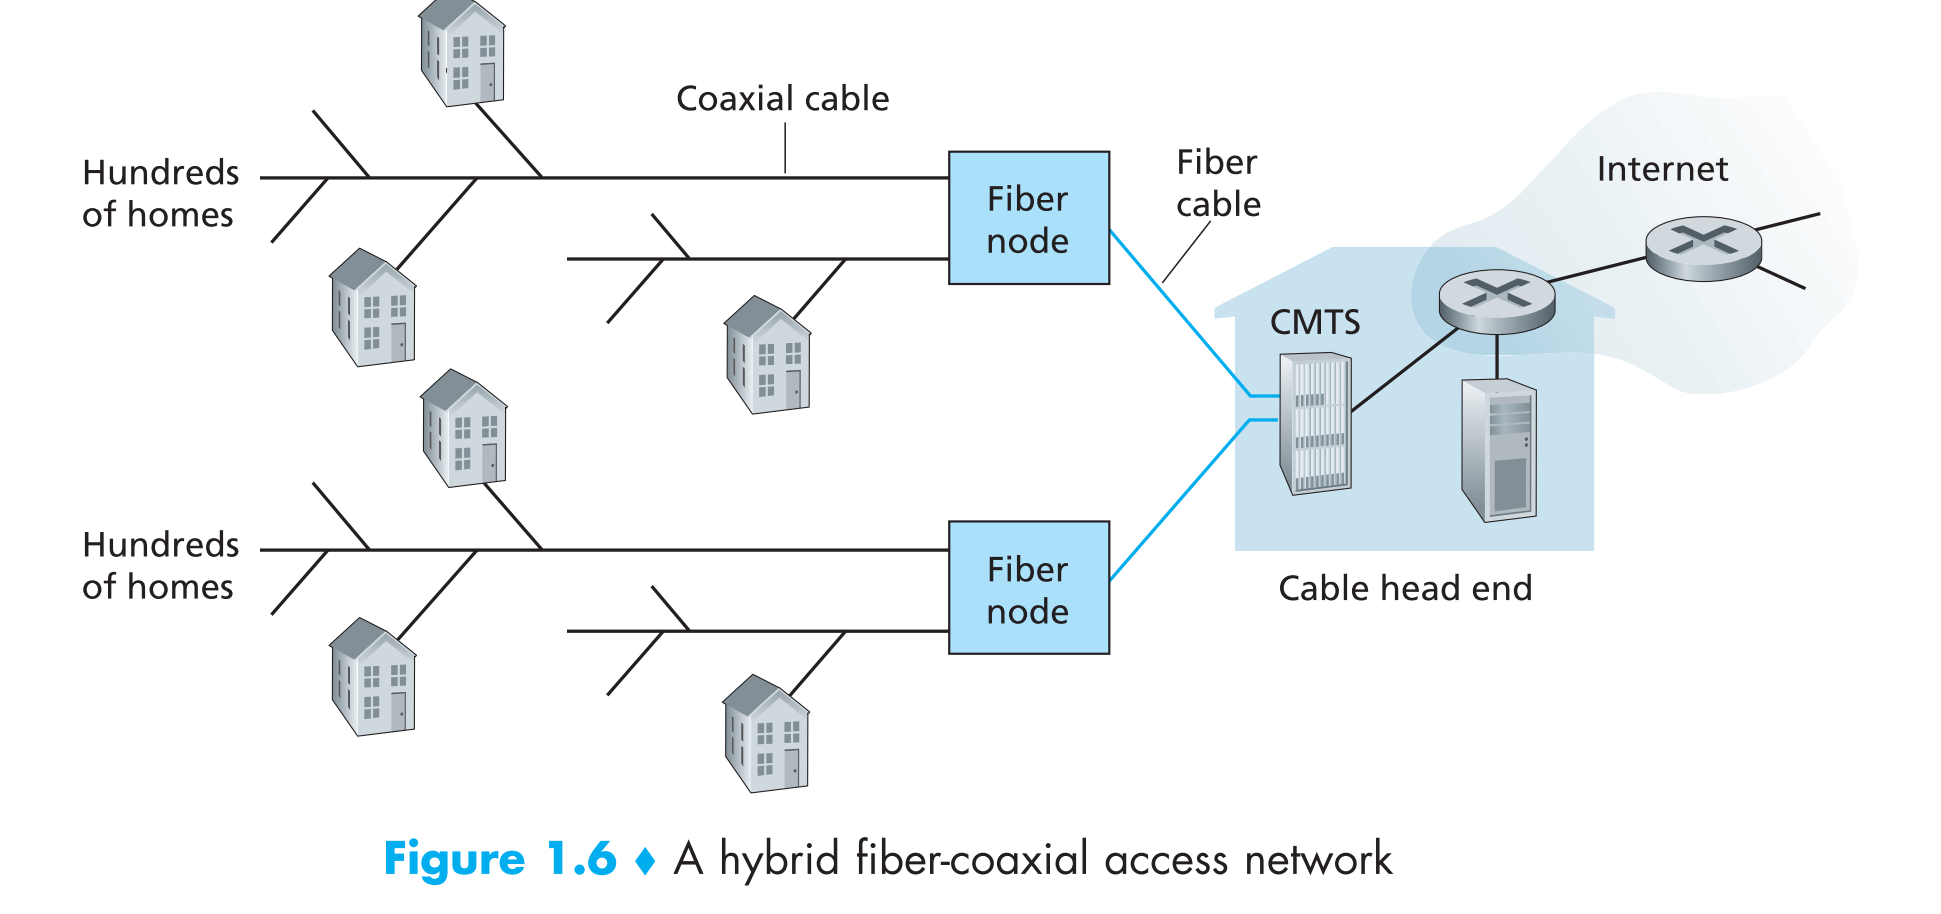 A hybrid fiber-coaxial access network